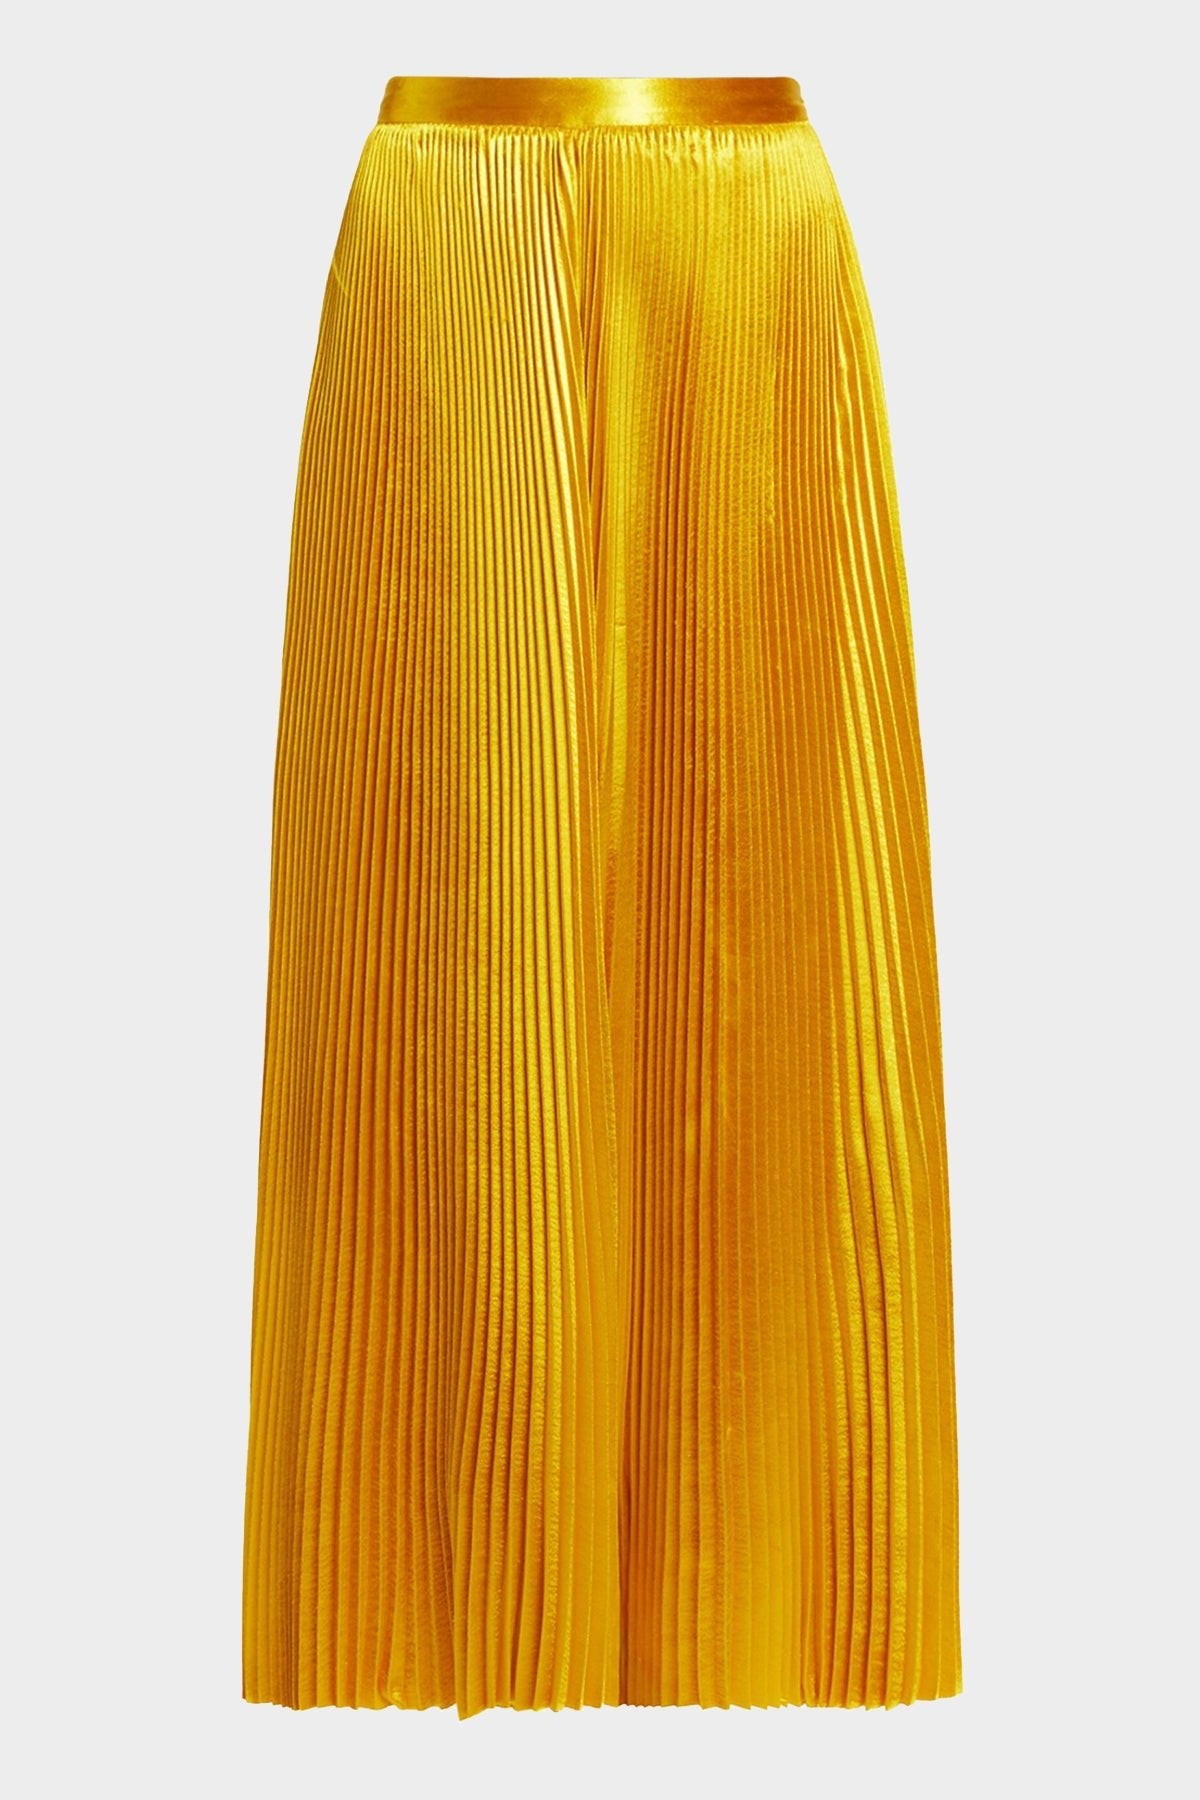 Rami Pleated Satin Maxi Skirt in Sunsprite - shop-olivia.com